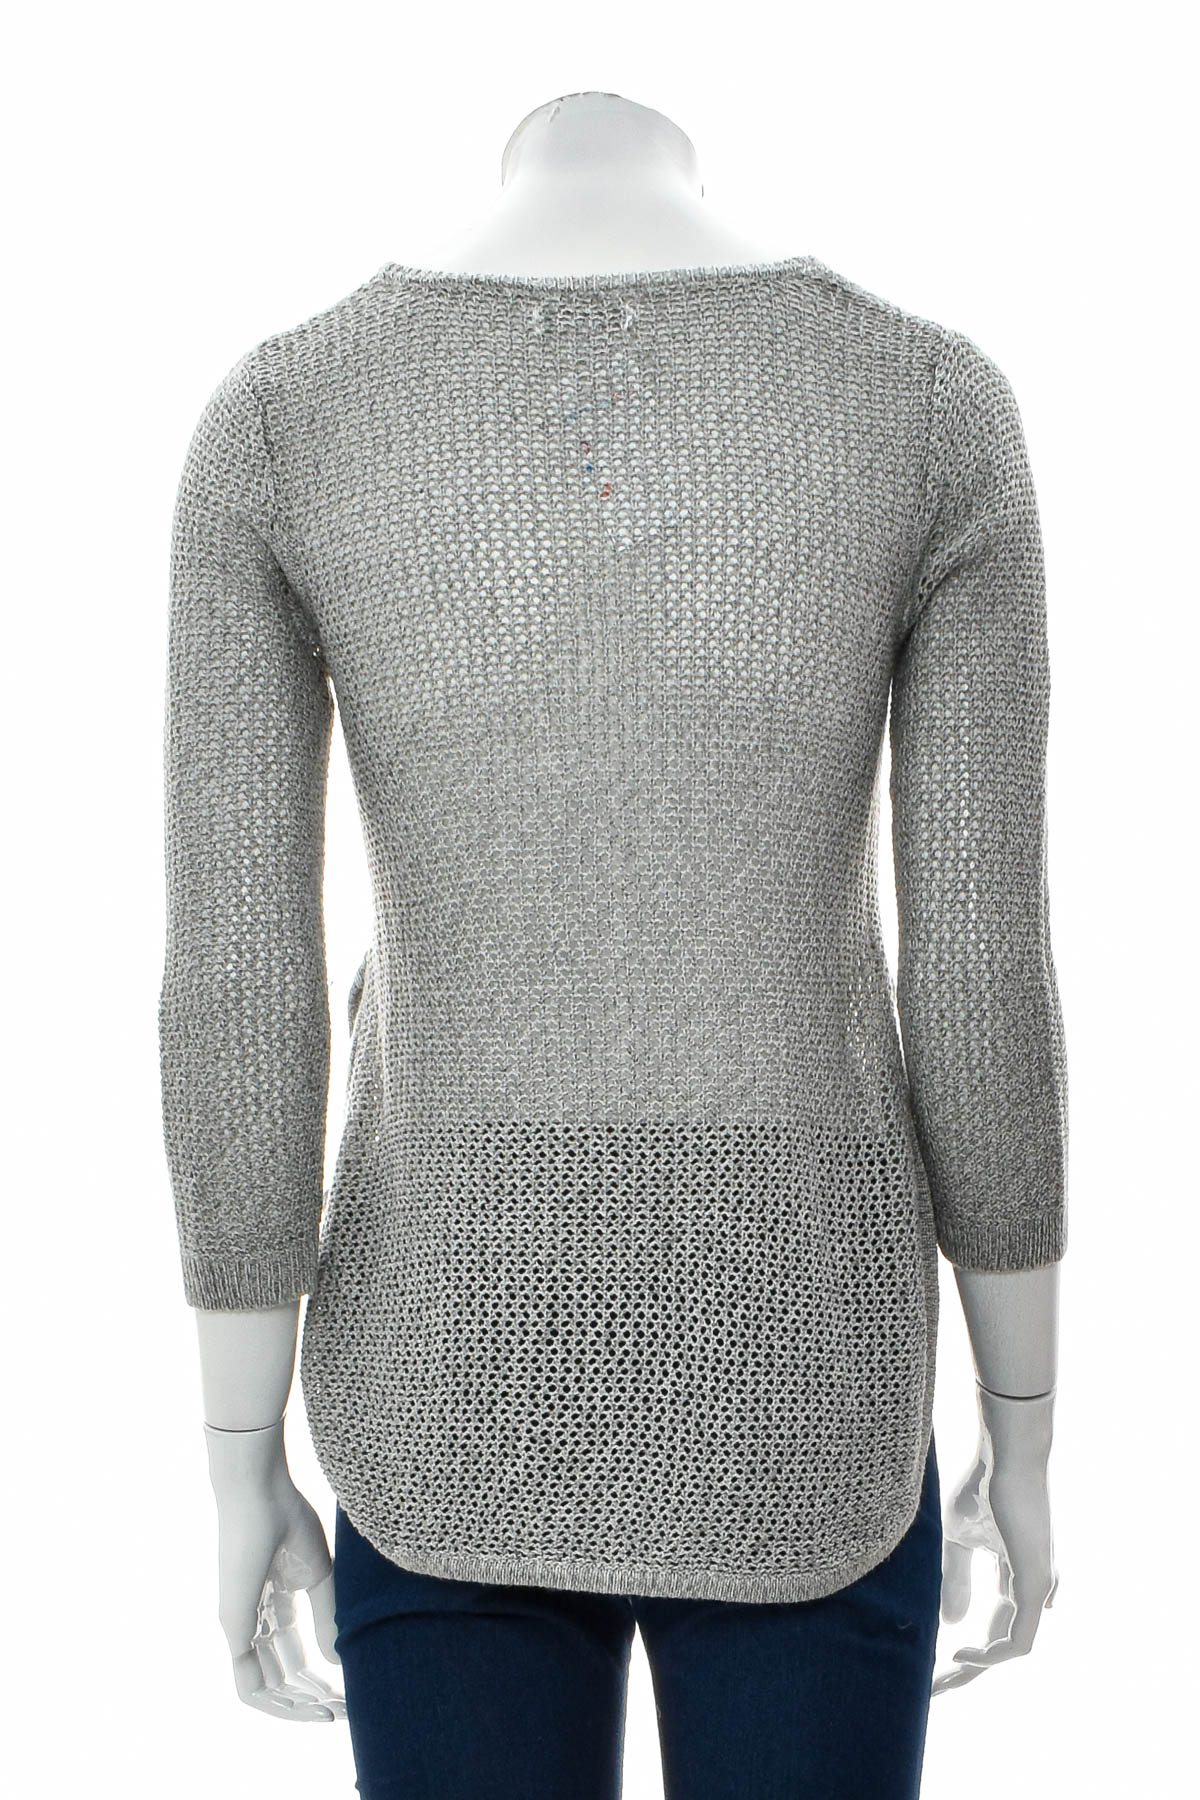 Women's sweater - New York & Company - 1